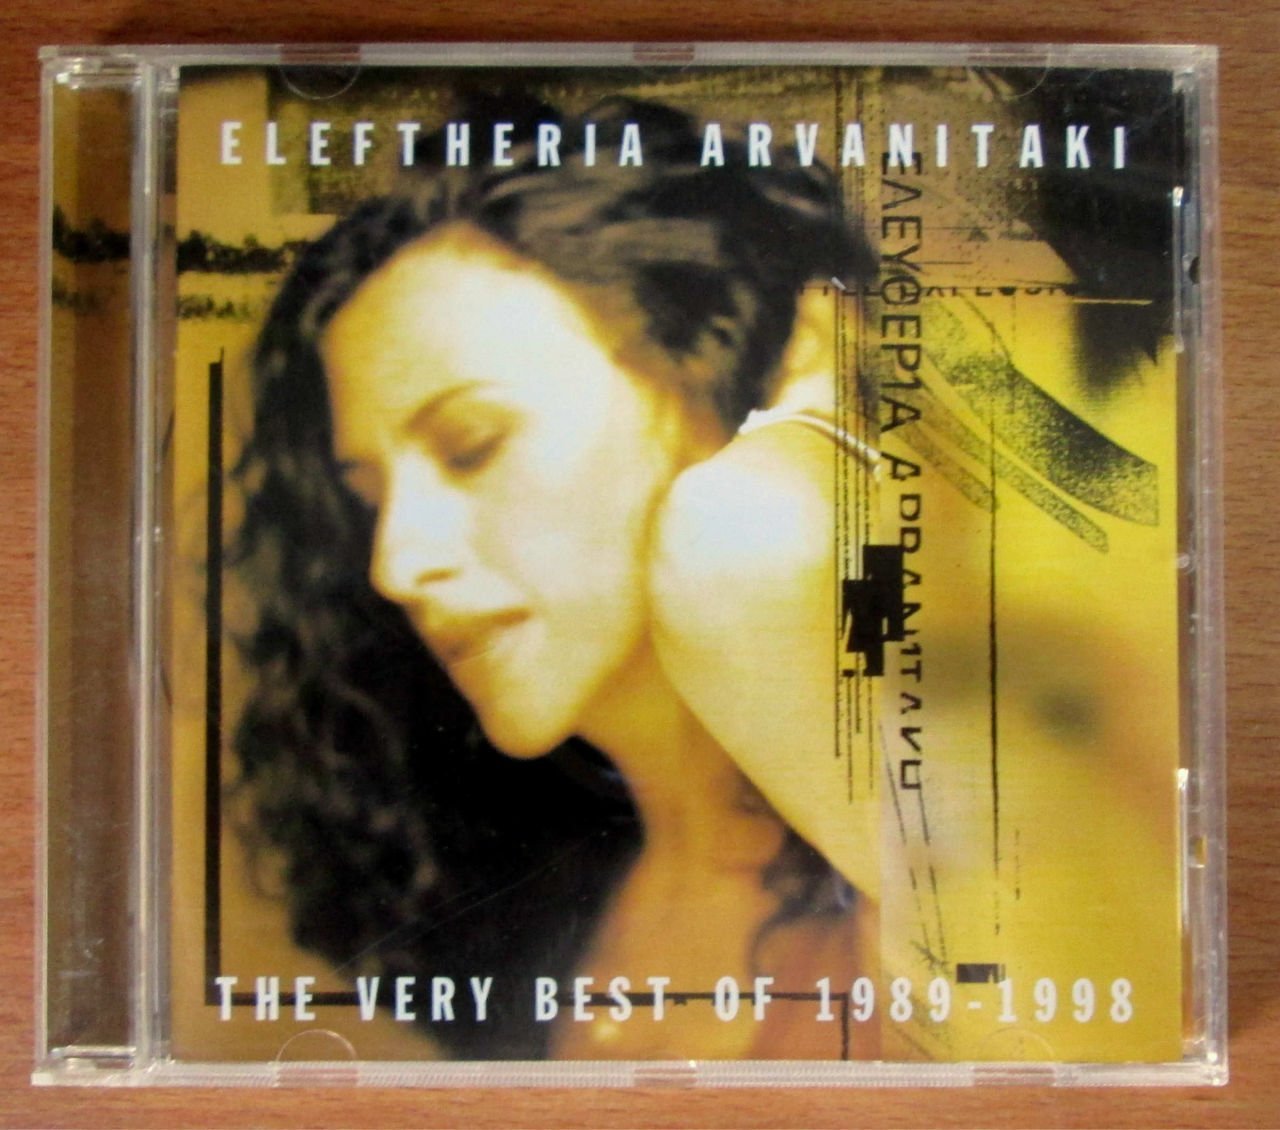 ELEFTHERIA ARVANITAKI - BEST OF 1989-98 CD 2.EL